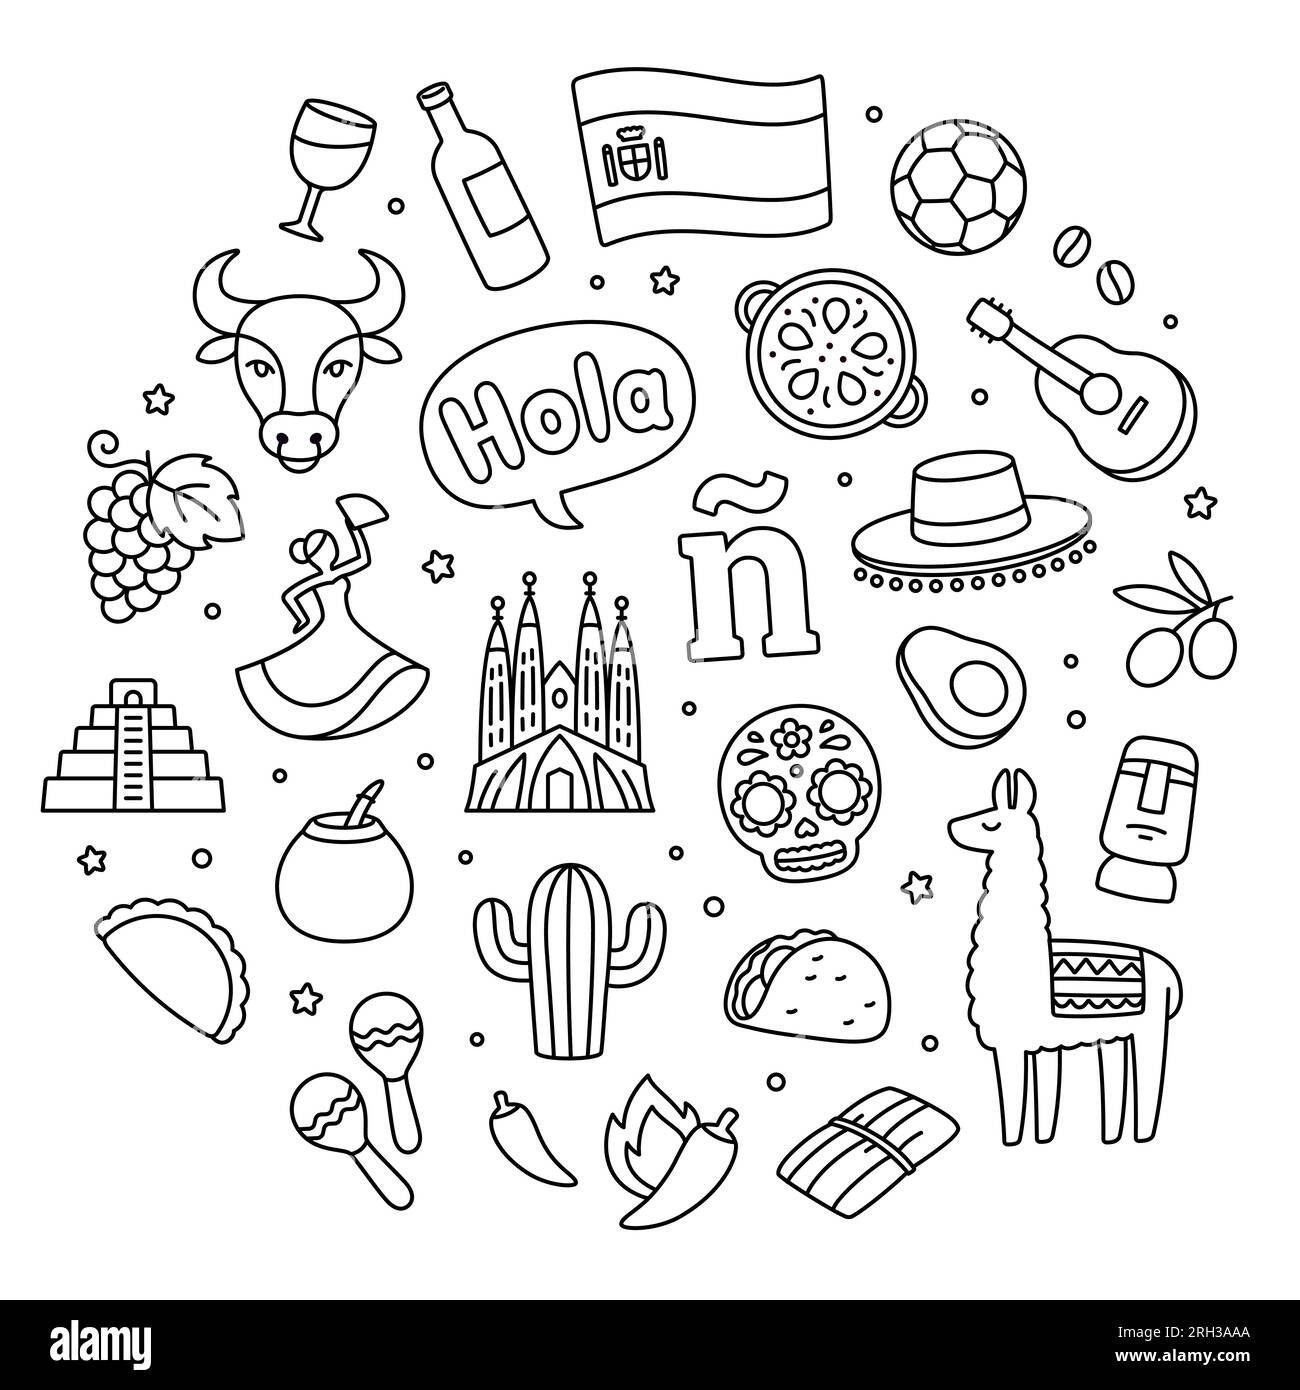 Spanish language and Hispanic cultures hand drawn doodle set. Spain and Latin America symbols. Vector line art illustration. Stock Vector